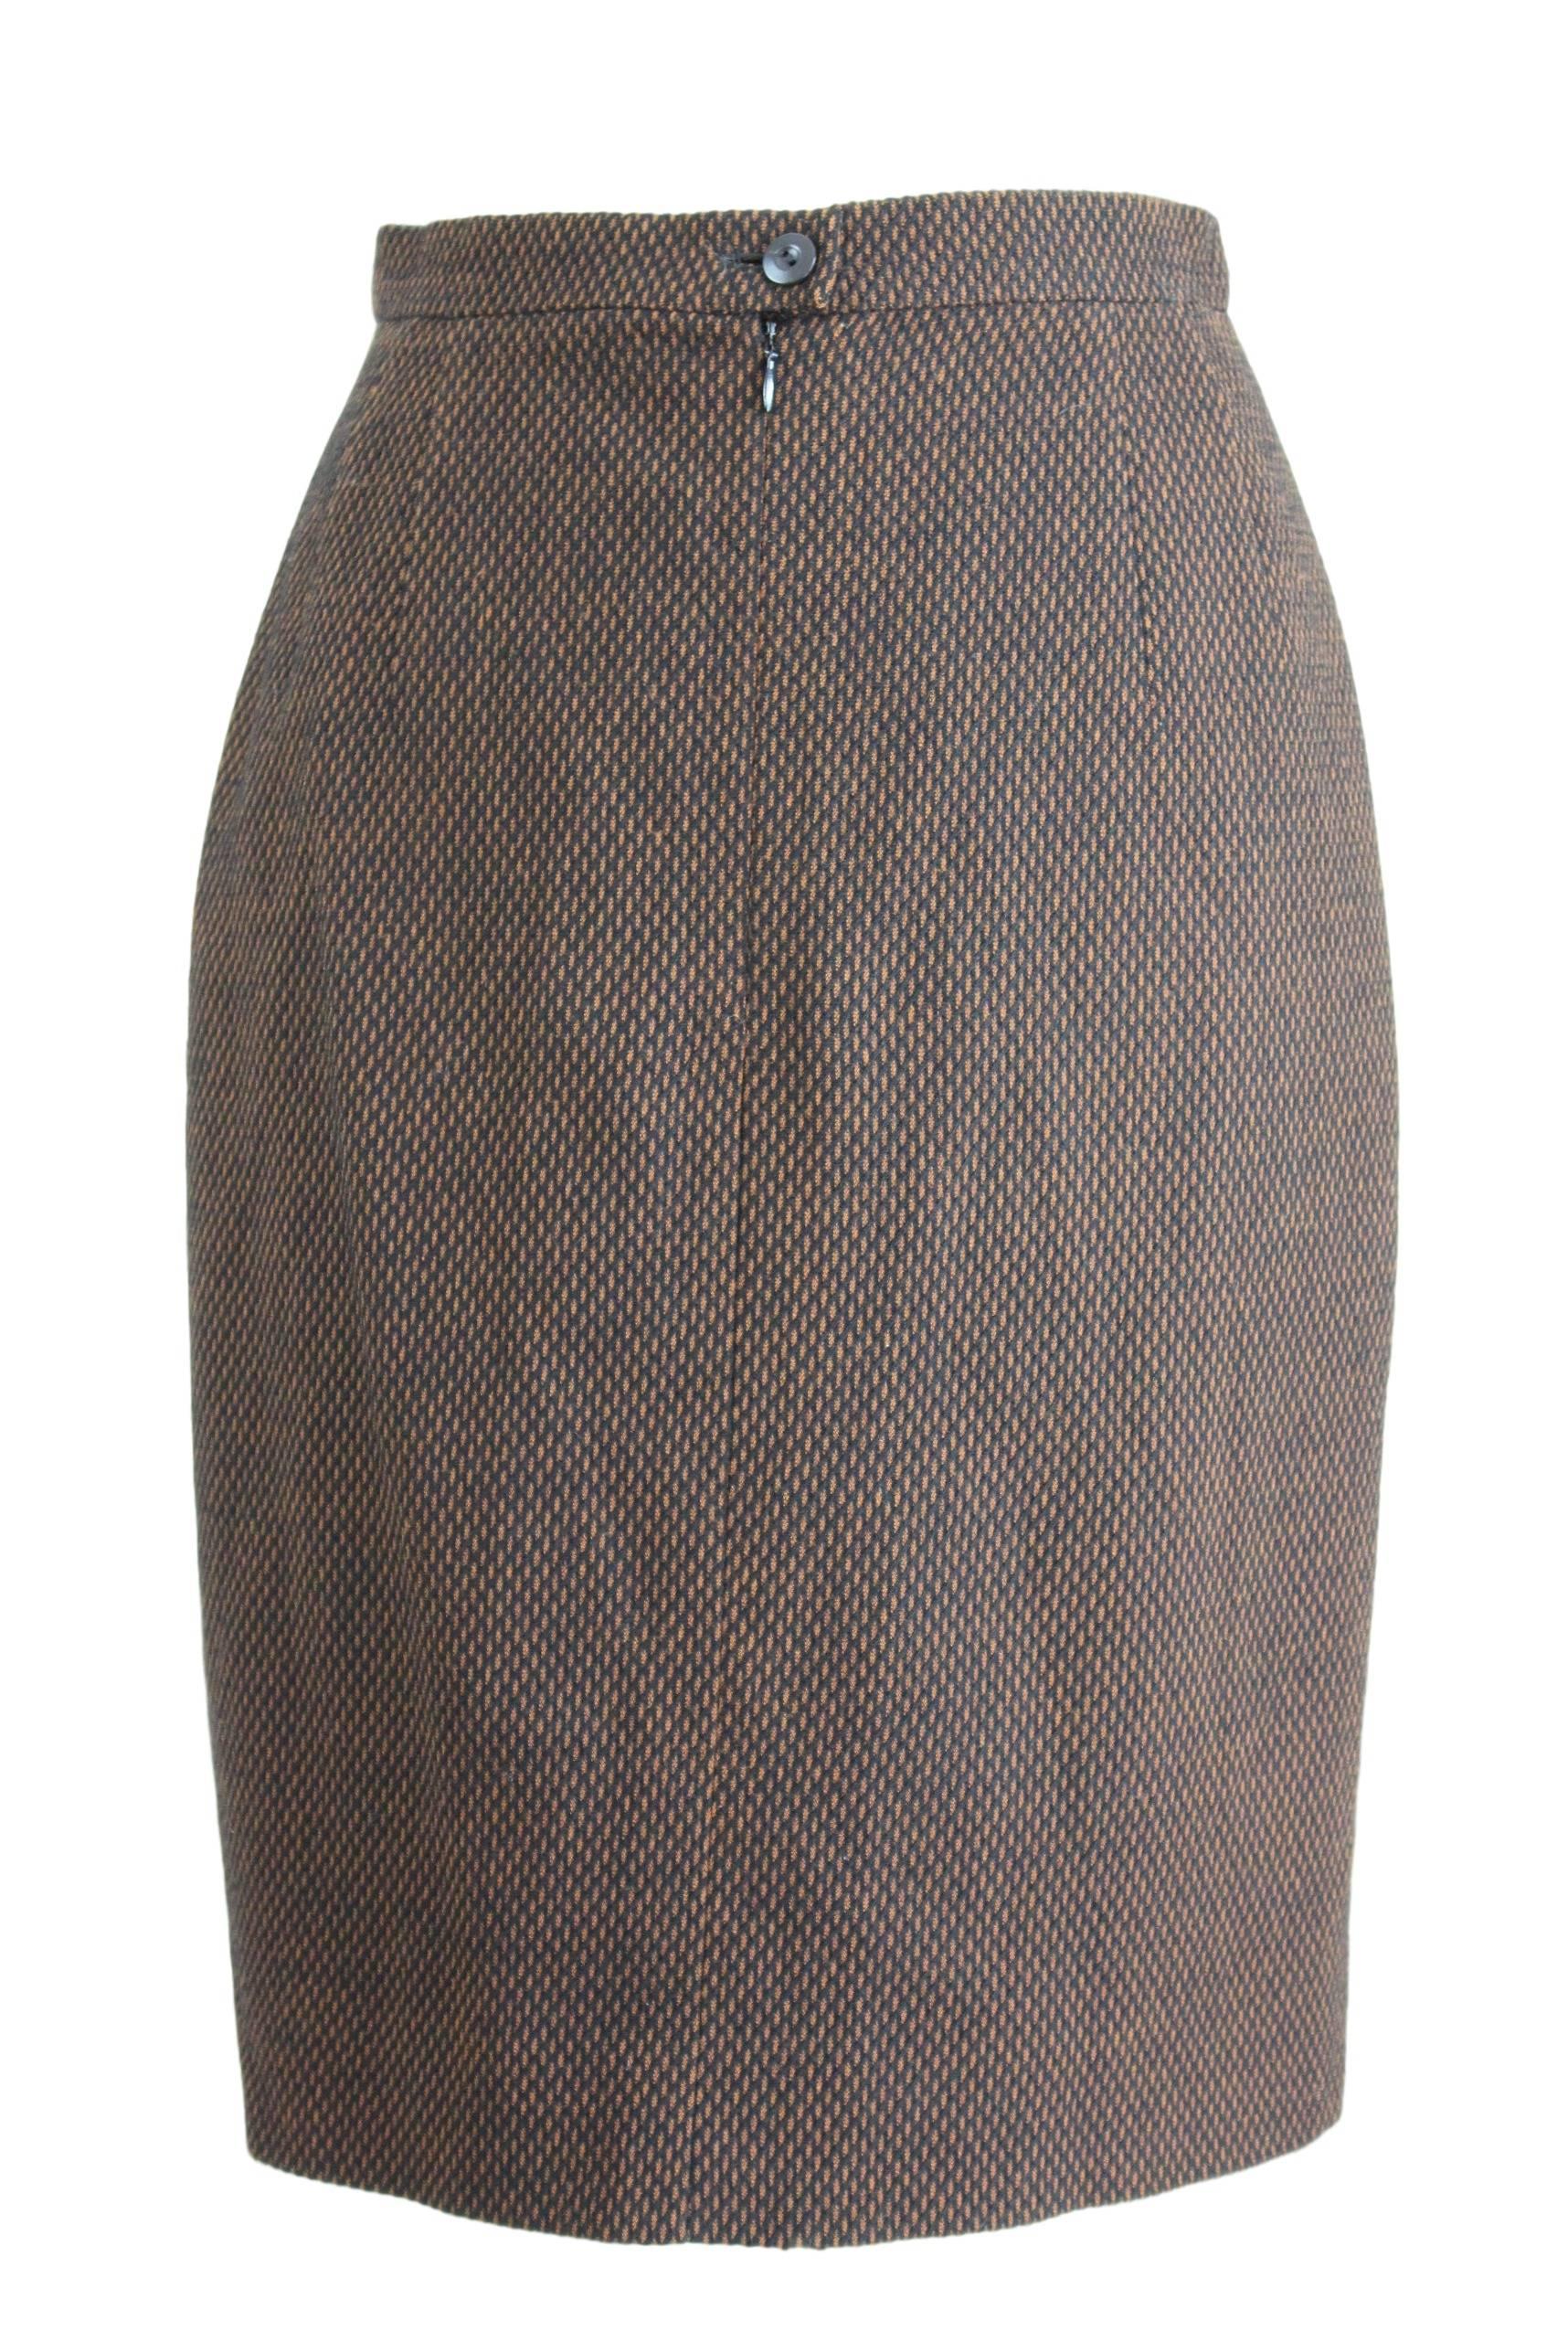 Gray 1980s Escada By Margaretha Ley Brown & Black Pique Wool Pencil Skirt  For Sale